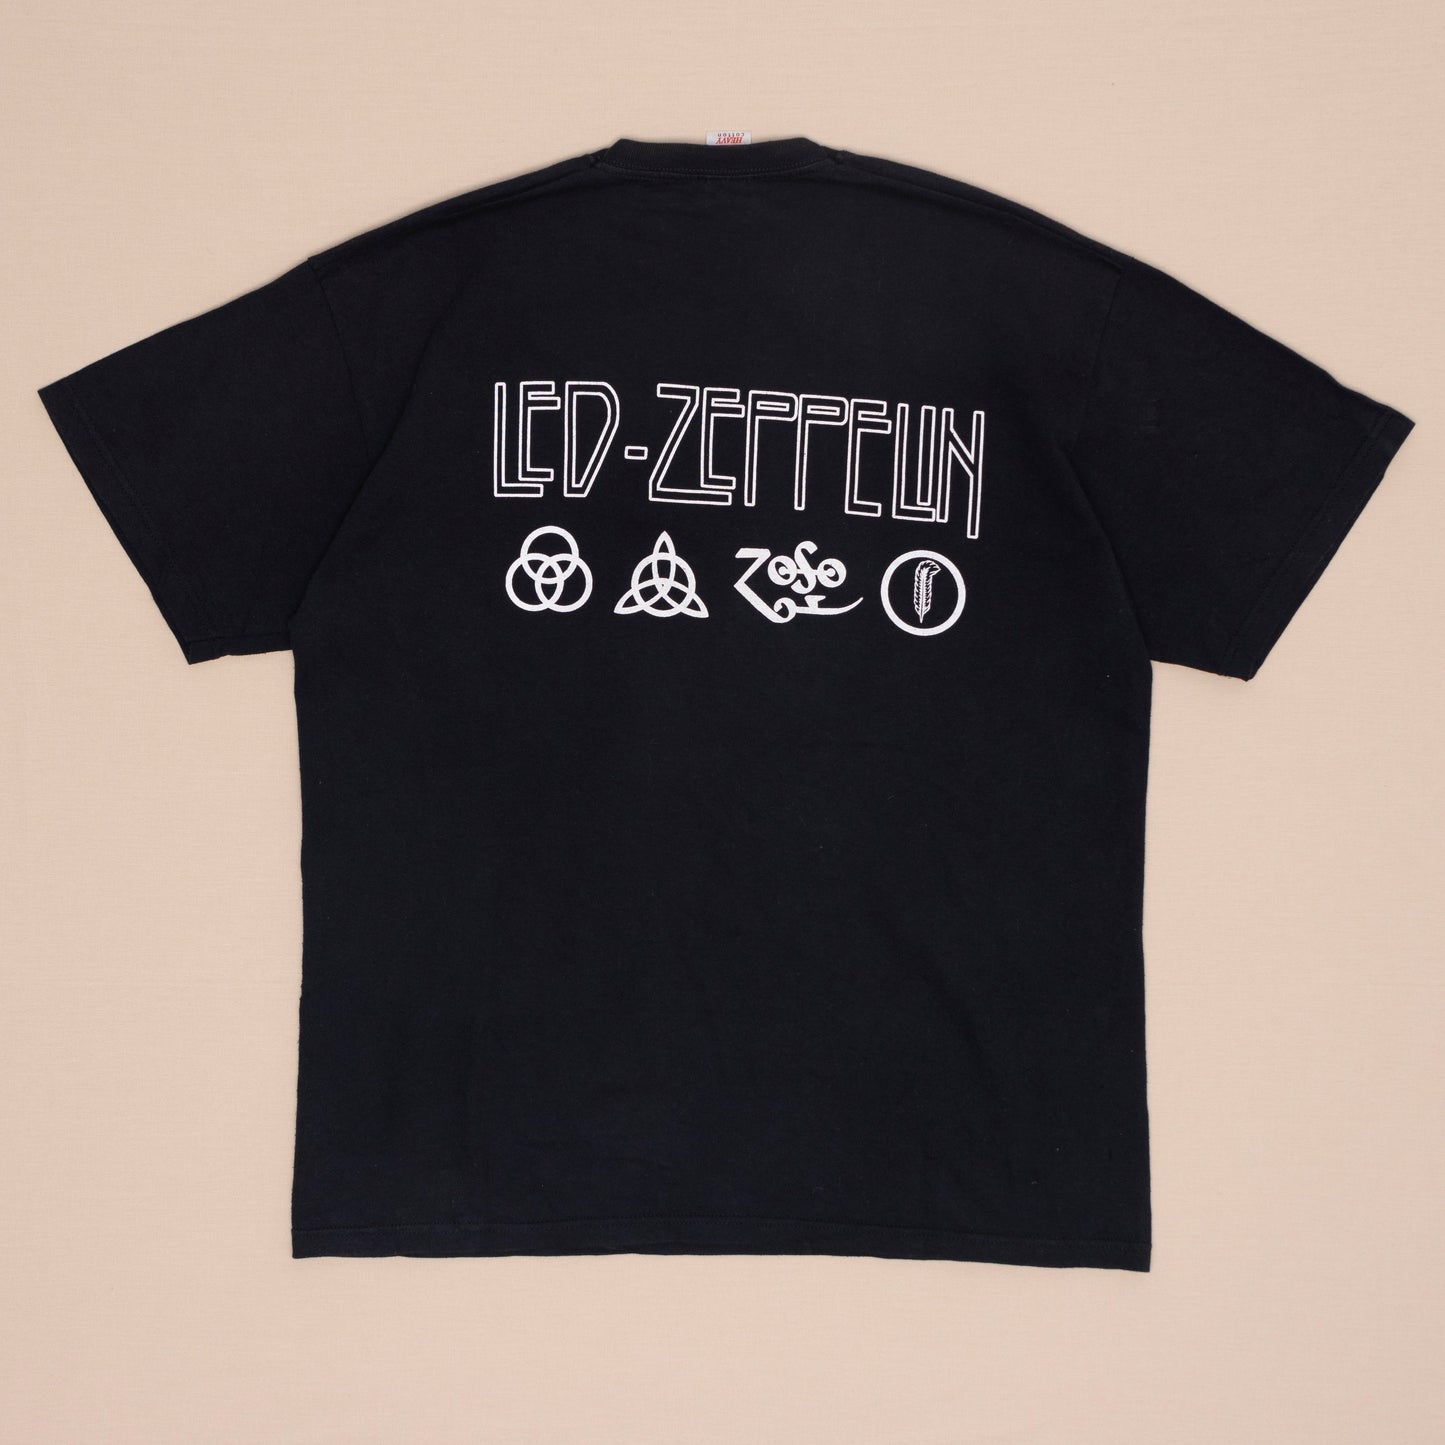 Led Zeppelin Icarus T Shirt, XL